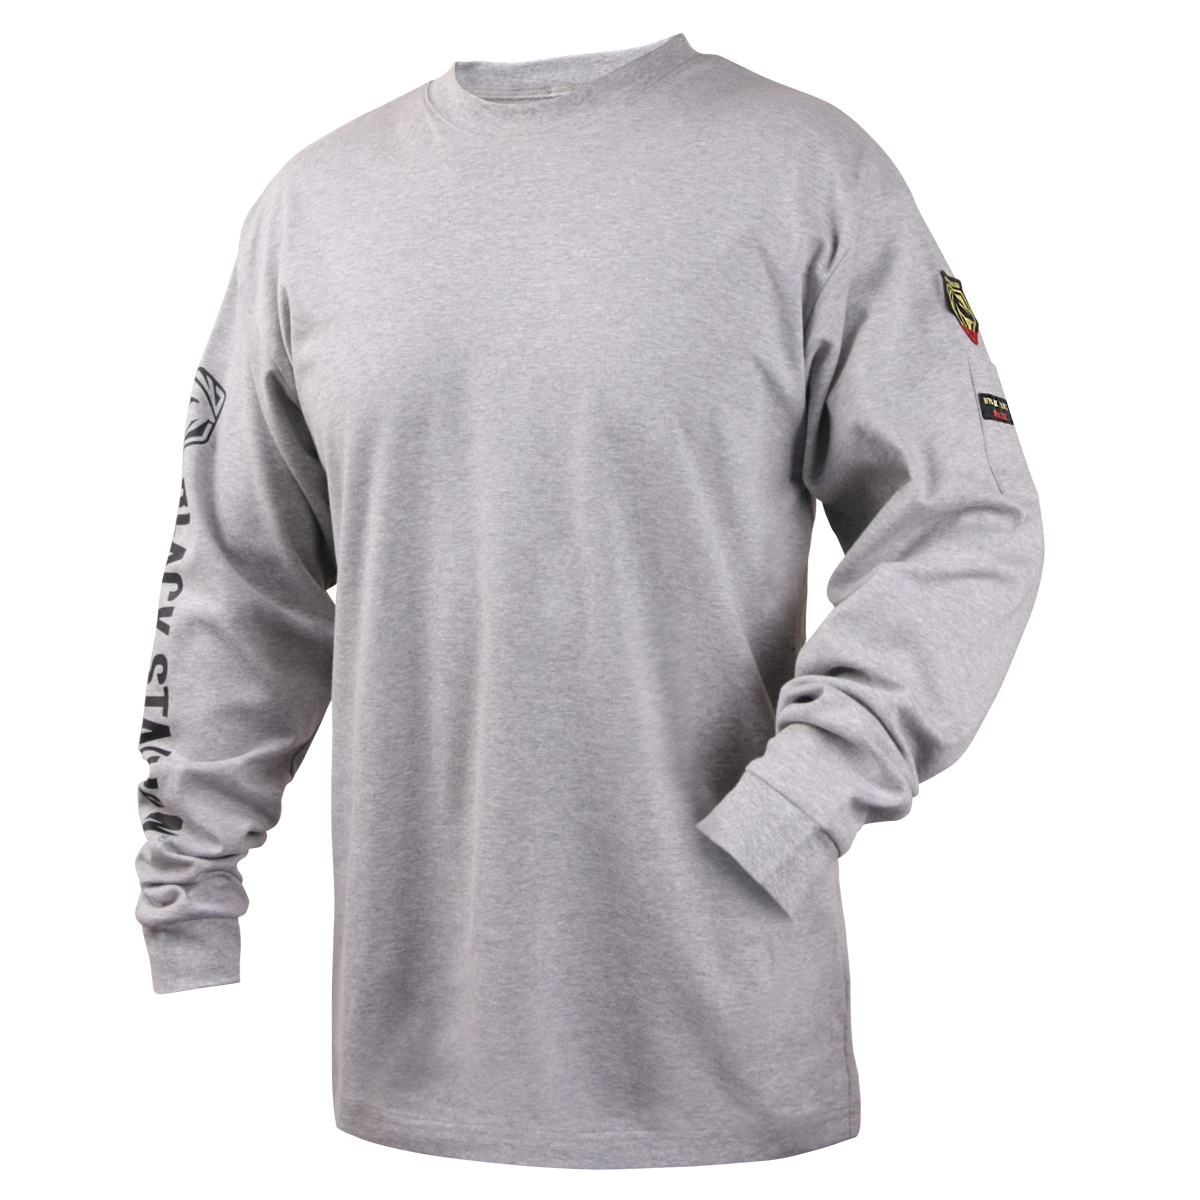 Black Stallion® TF2510-GY-SML TF2510-GY Long Sleeve T-Shirt, Men's, S, Heather Gray, Cotton Jersey Knit